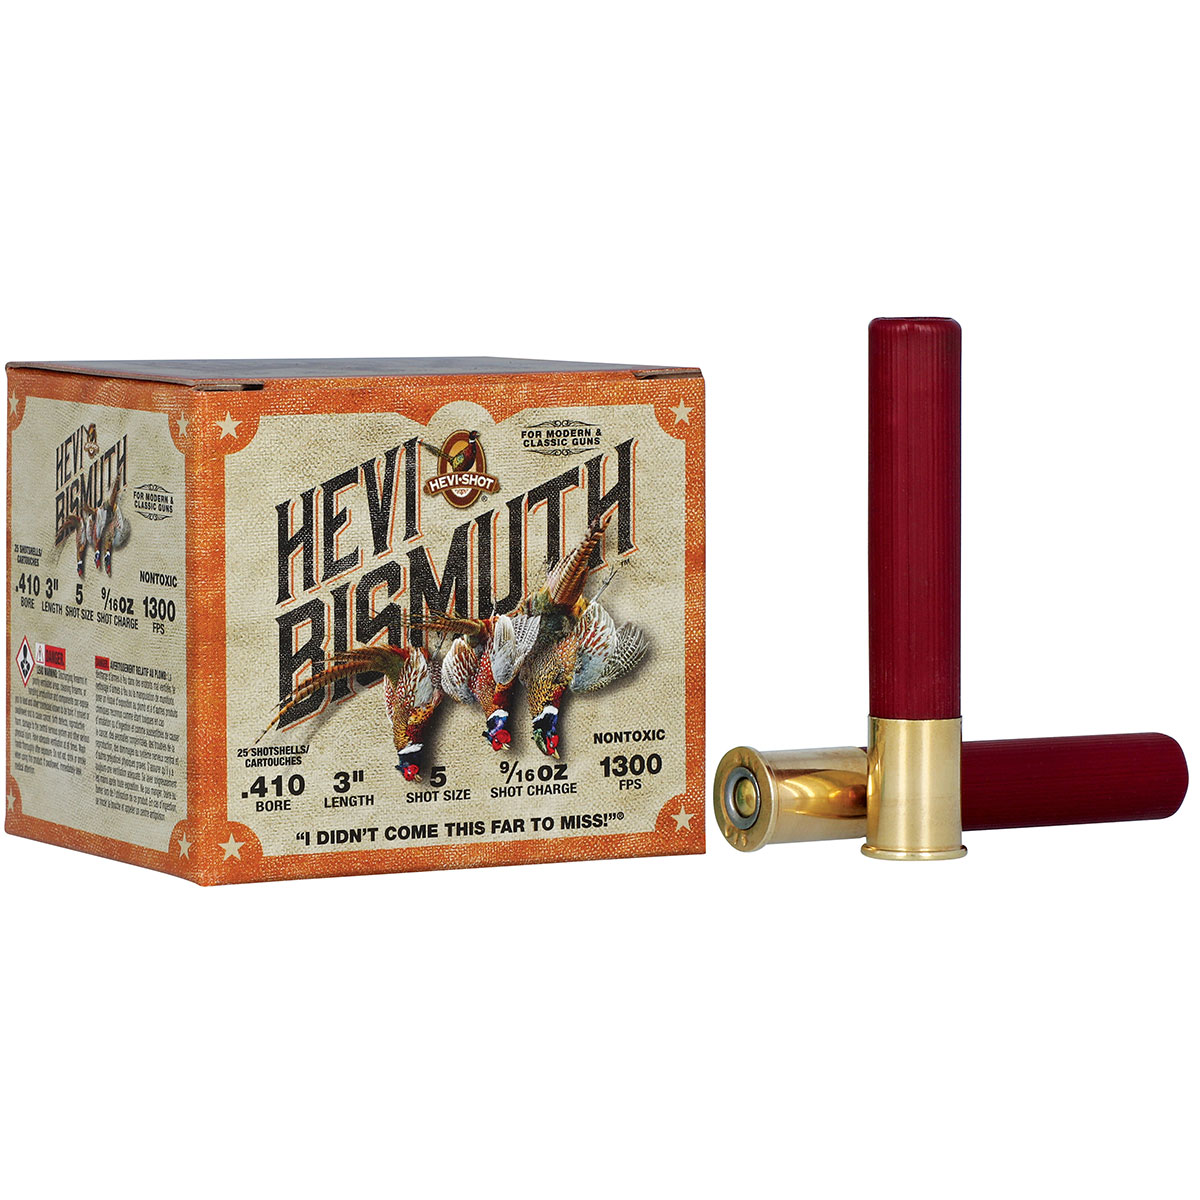 HEVI SHOT - HEVI-BIMUTH UPLAND 410 BORE SHOTGUN AMMO